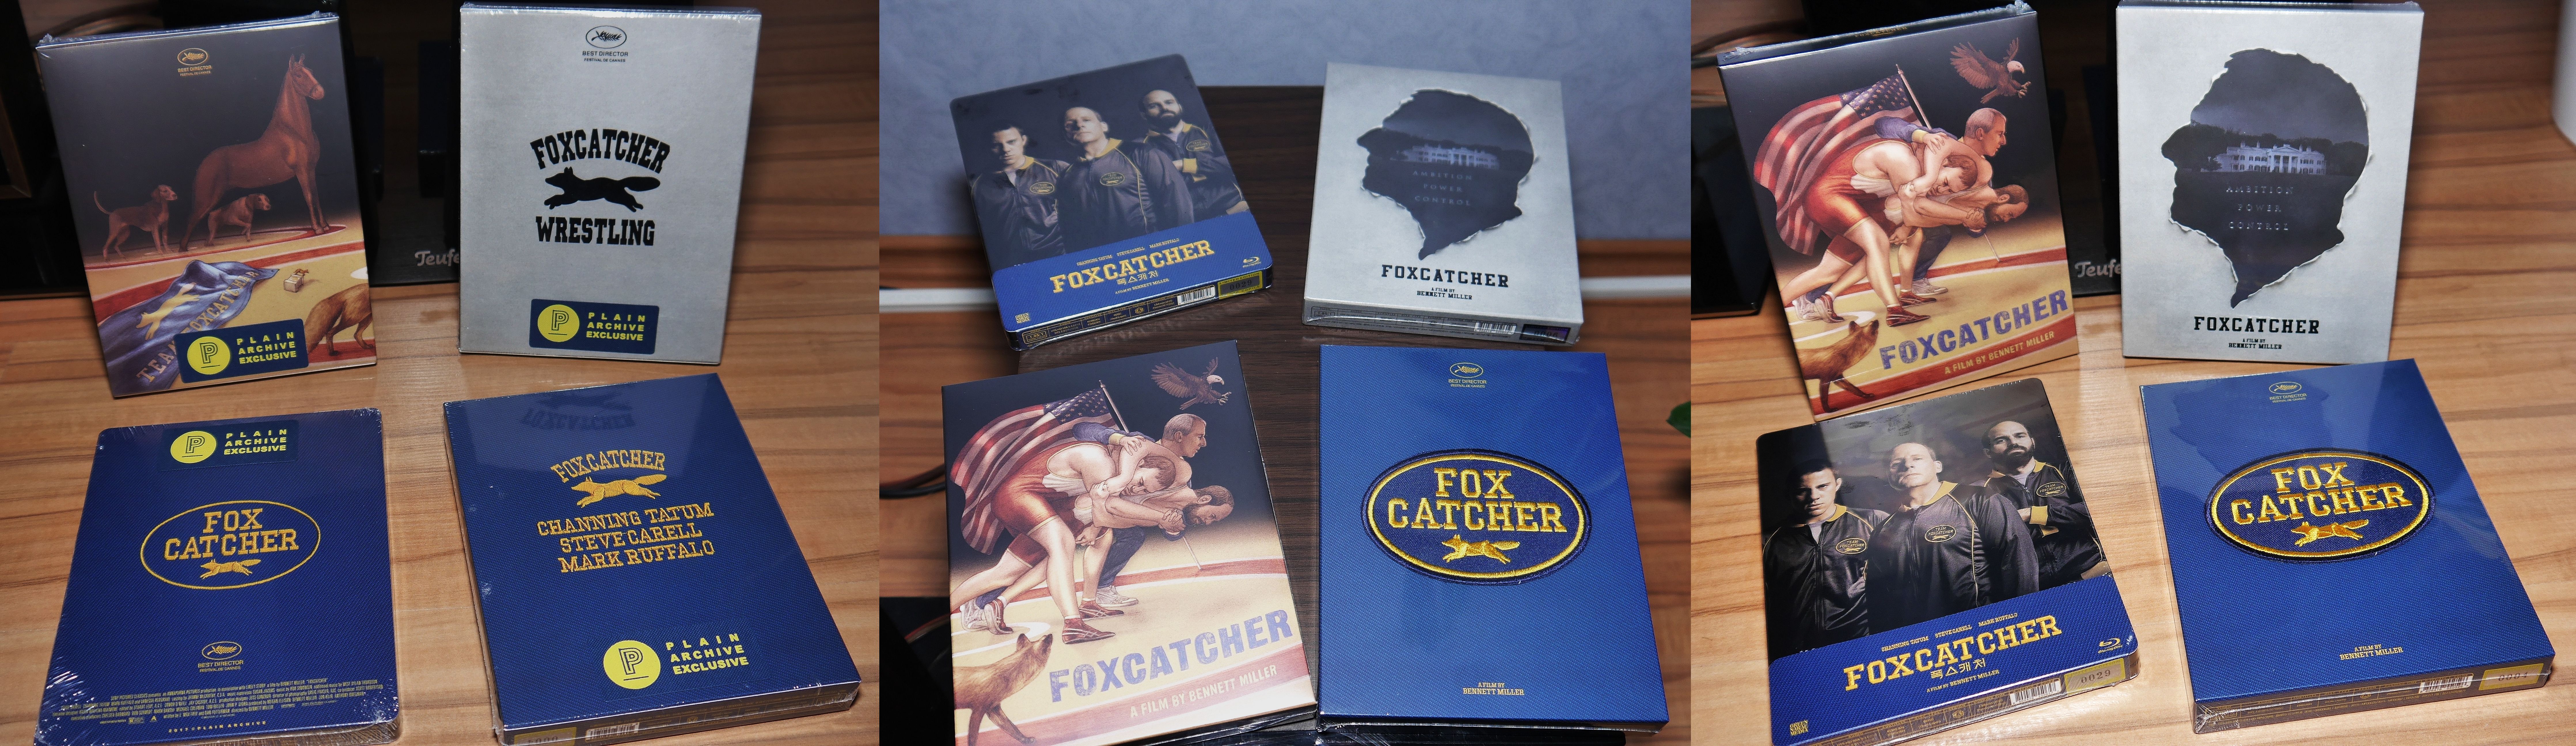 Plain Archive Foxcatcher Korea Steelbook Bluray